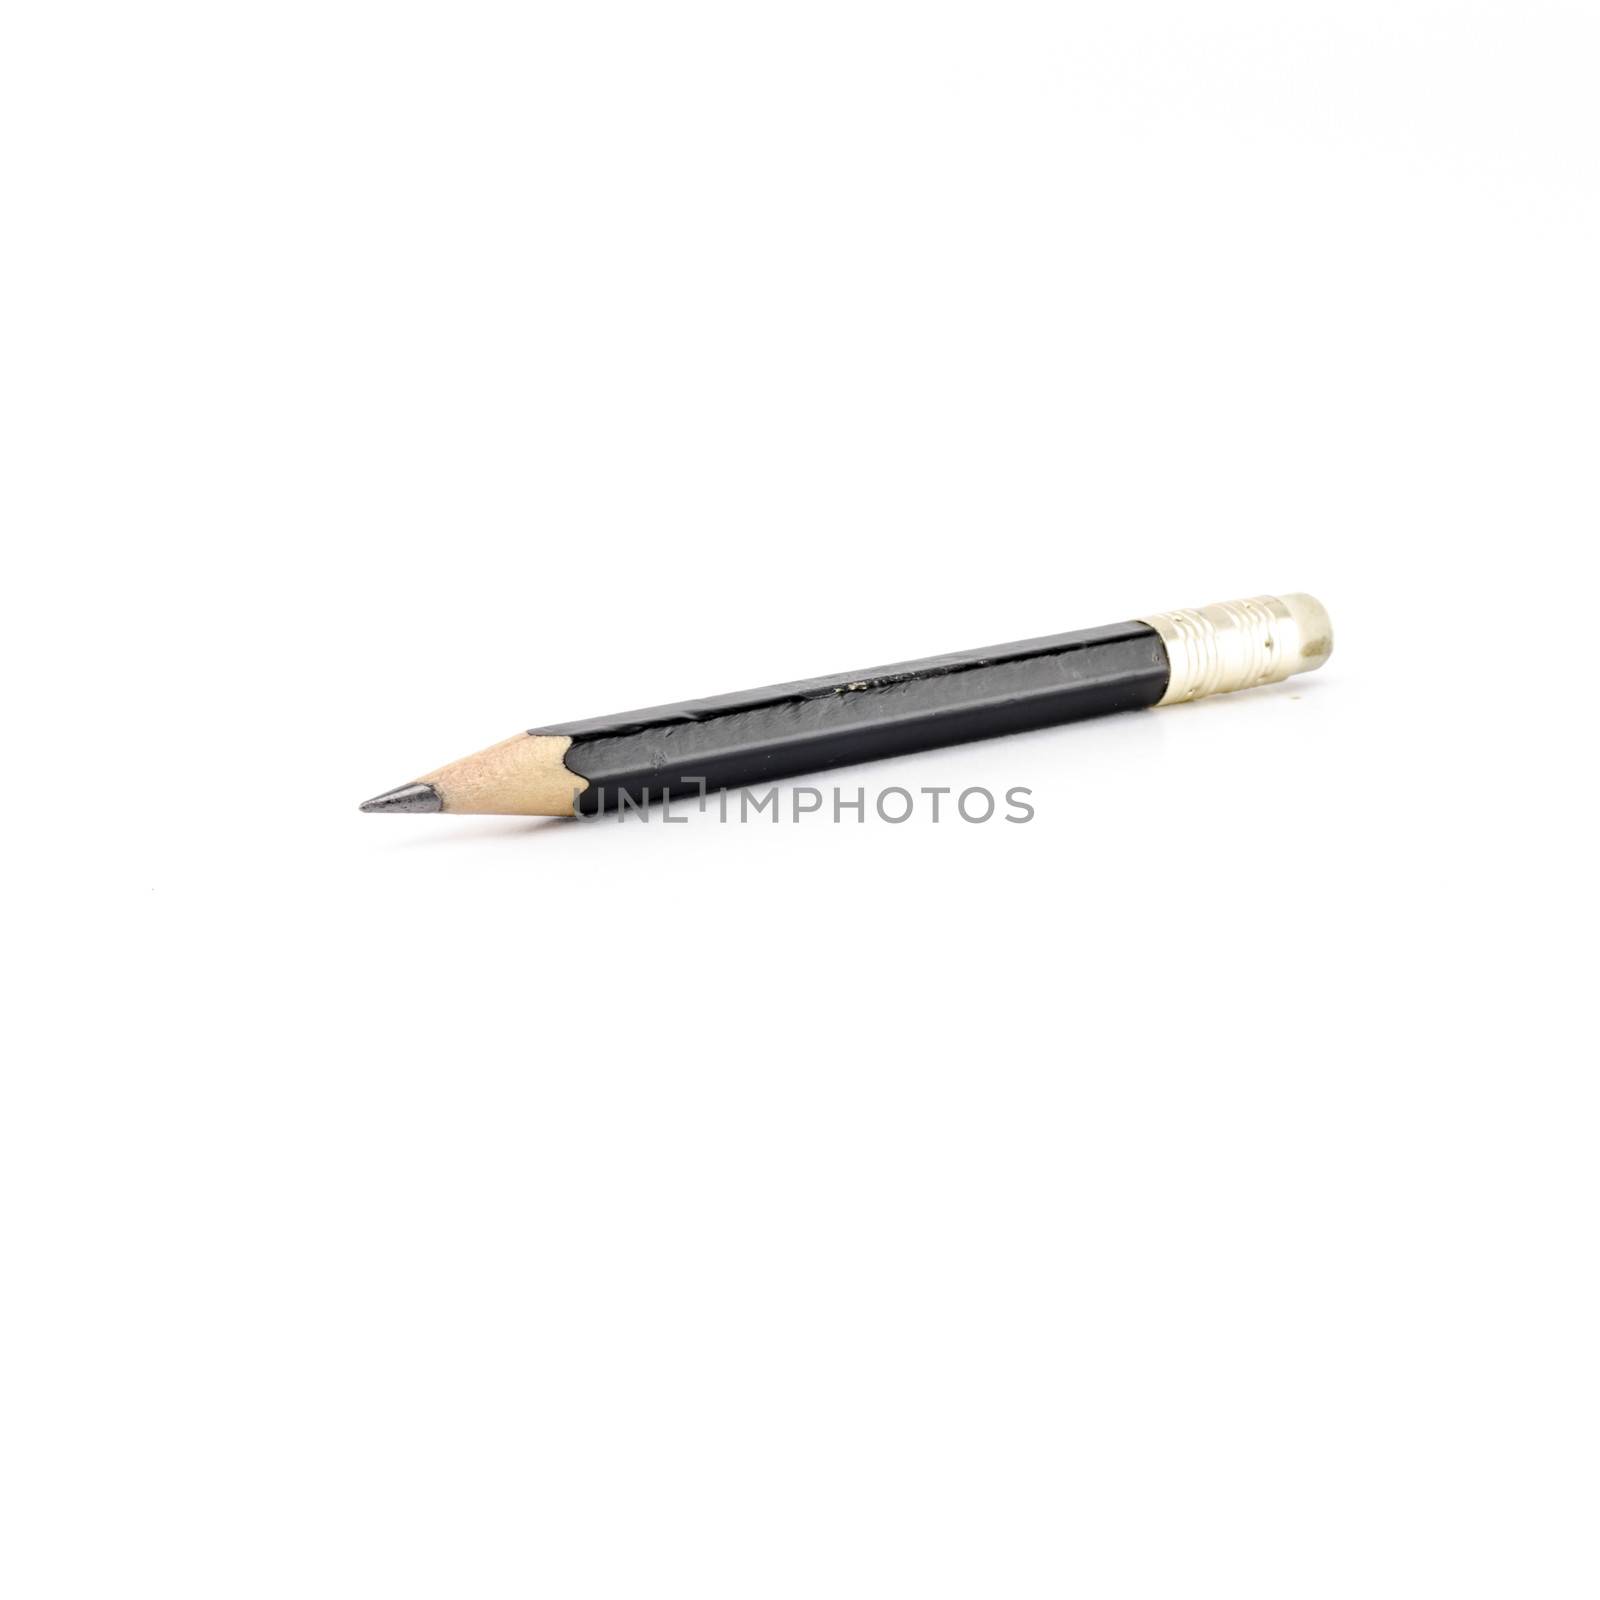 short black pencil isolated on white background